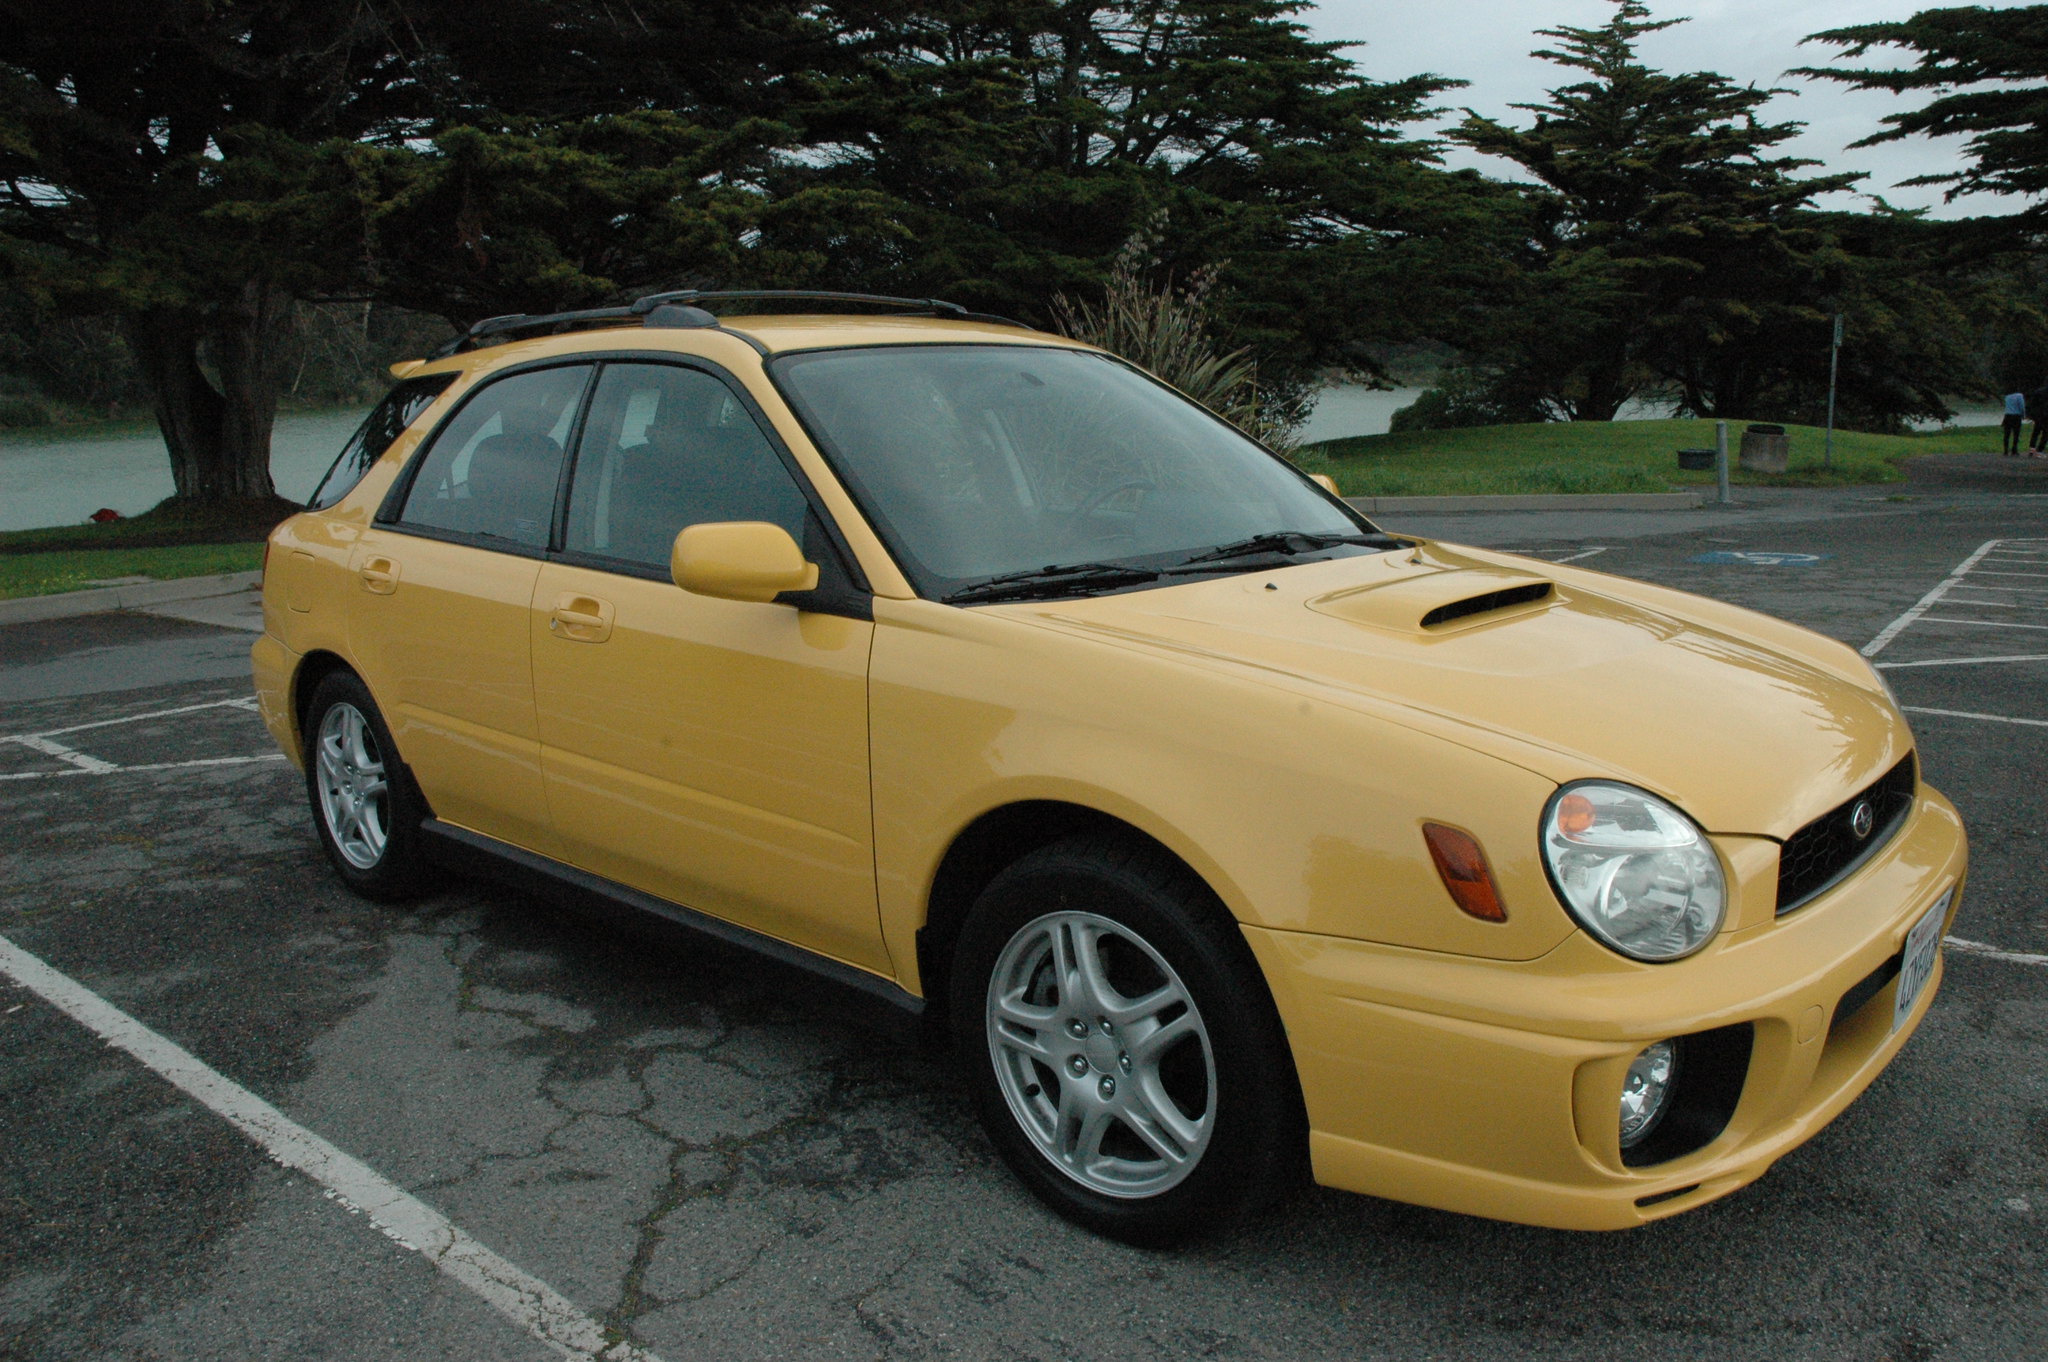 FS (For Sale) CA 2003 Subaru WRX Wagon Sonic Yellow 103k